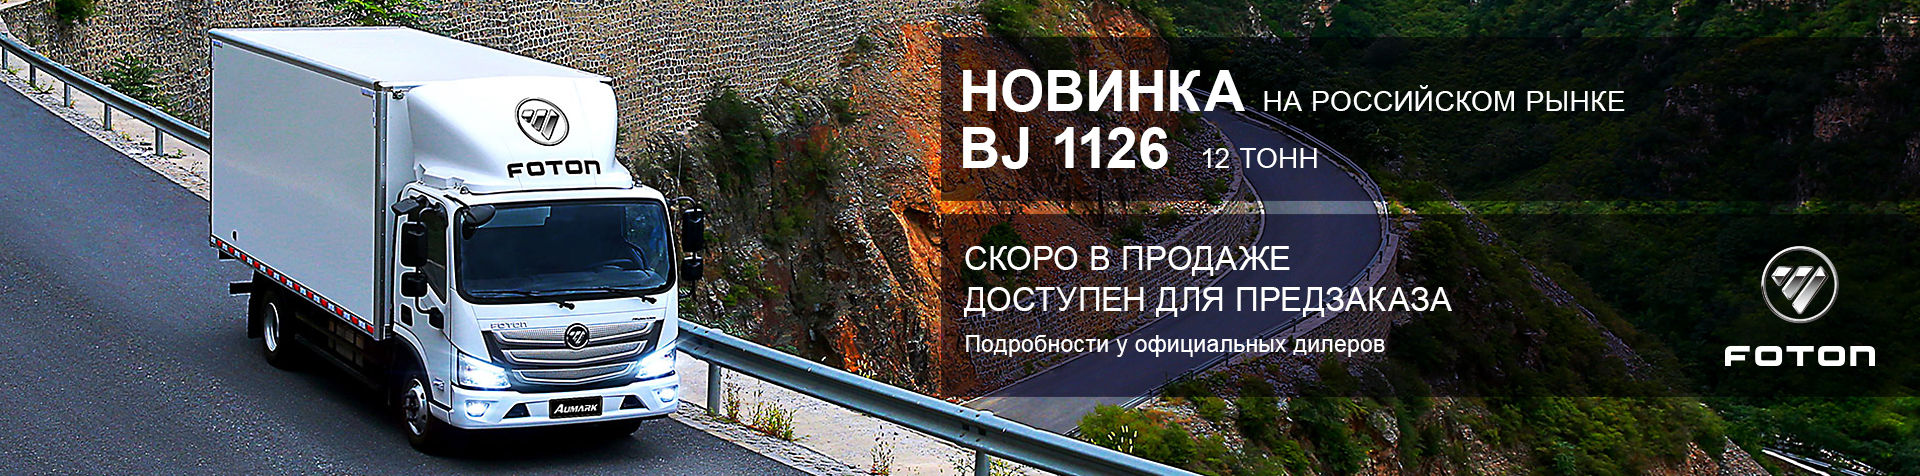 Новинка на российском рынке: BJ 1126.